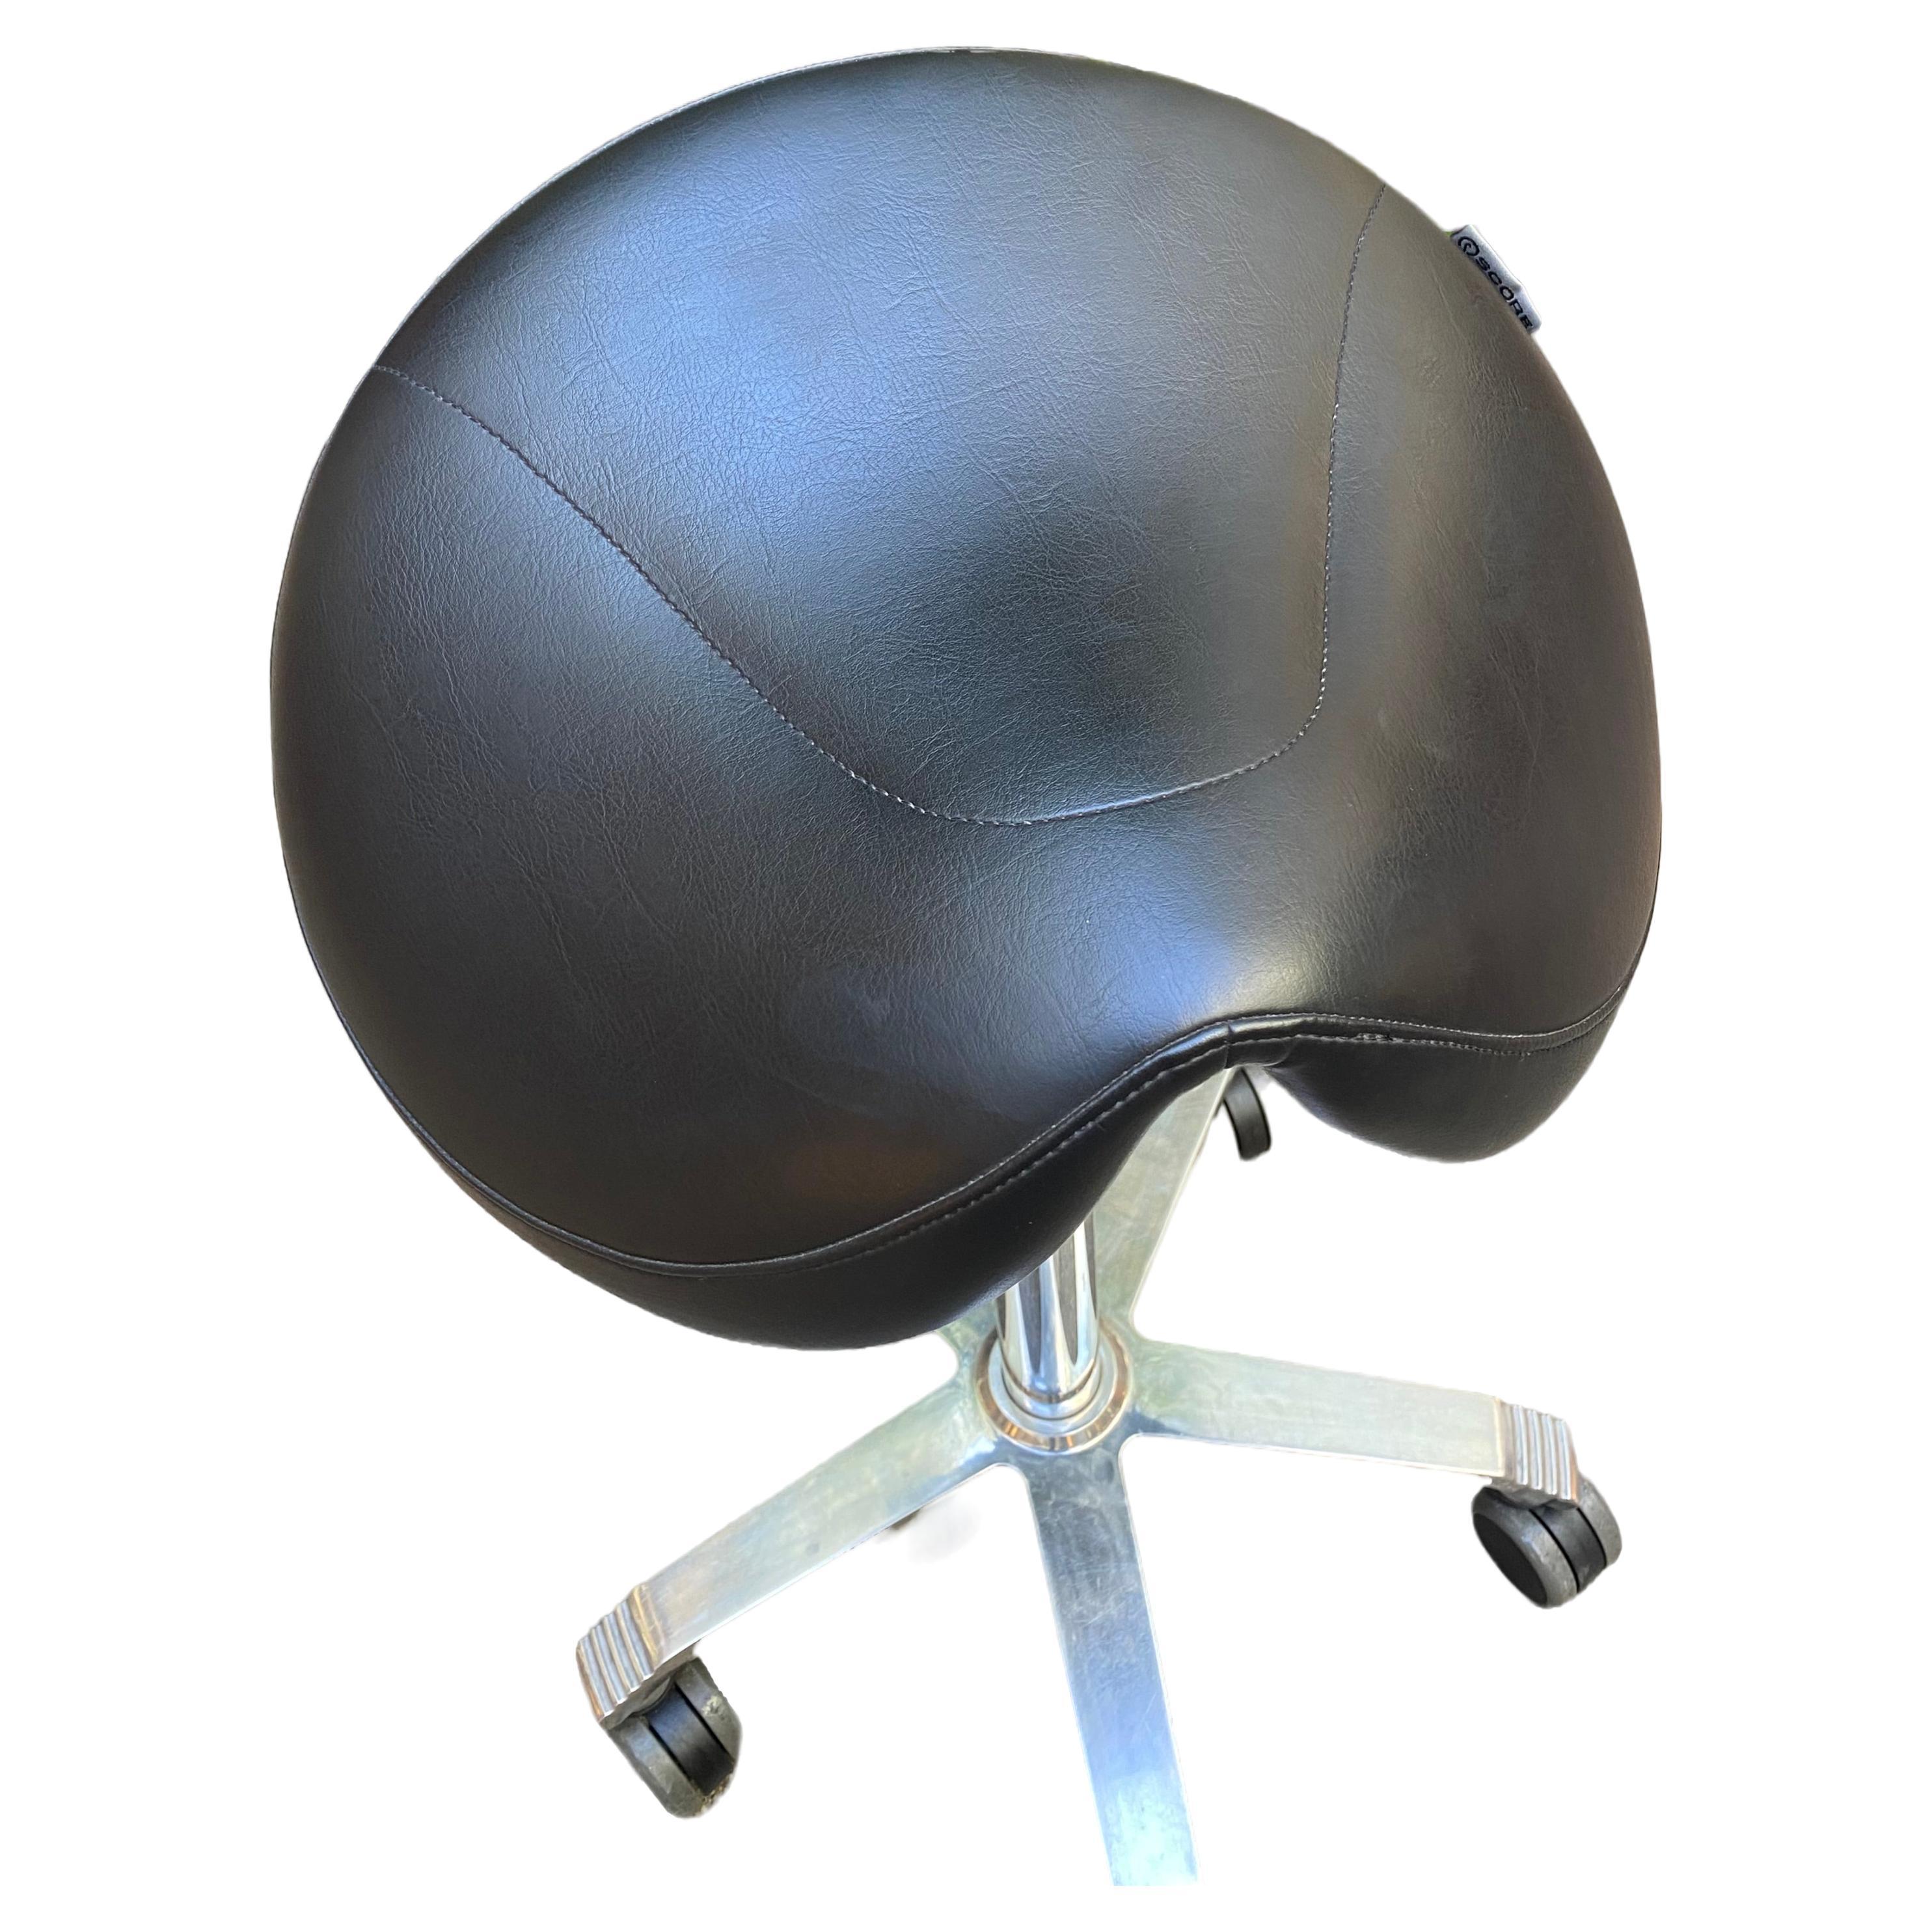 Saddle stool “Jumper Balance Seamless” / Score Edition For Sale